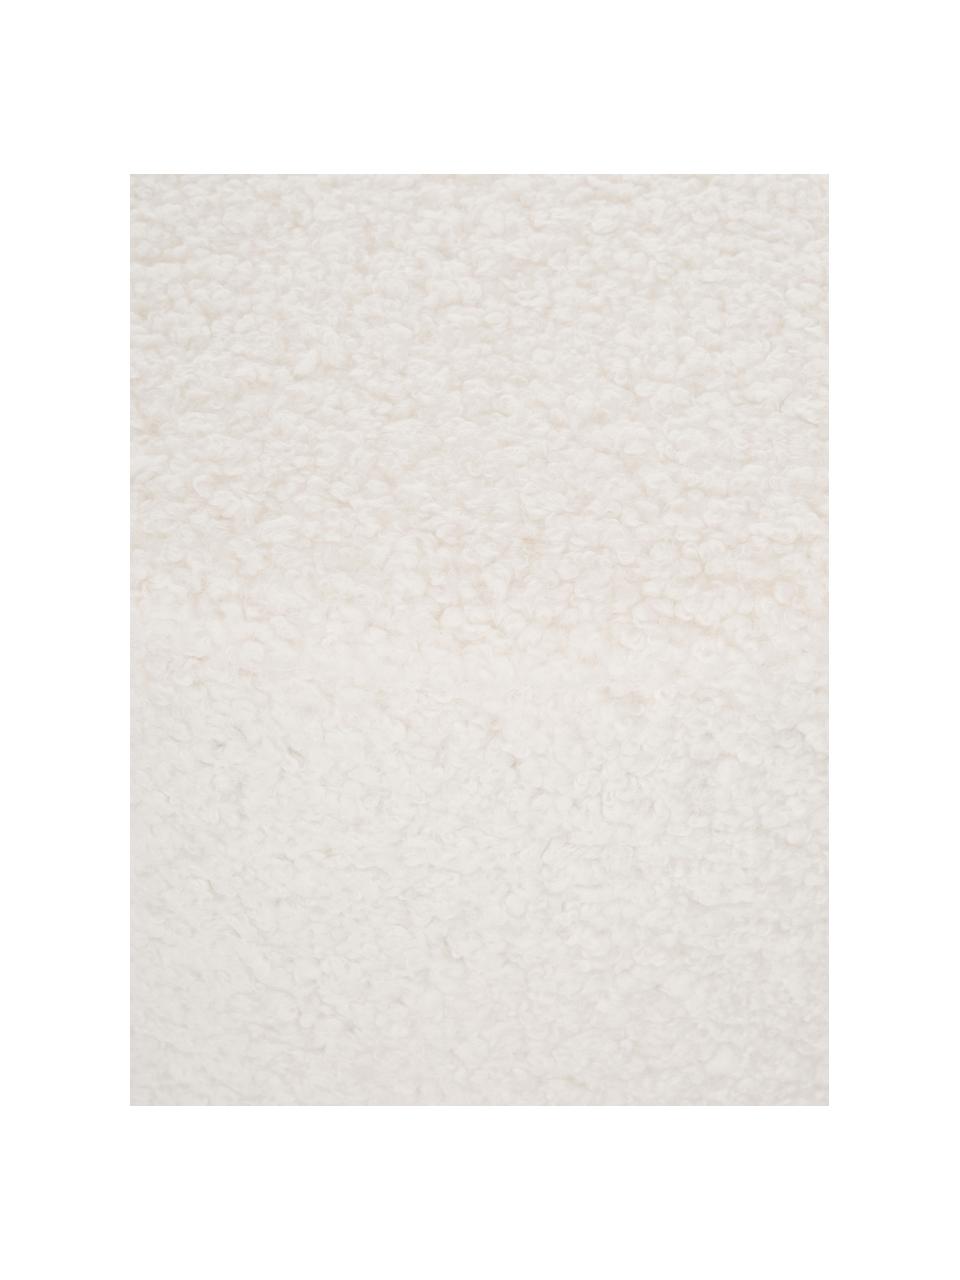 Pouf in tessuto teddy bianco crema Daisy, Rivestimento: poliestere (teddy) 40.000, Struttura: compensato, Teddy bianco panna, Ø 54 x Alt. 38 cm